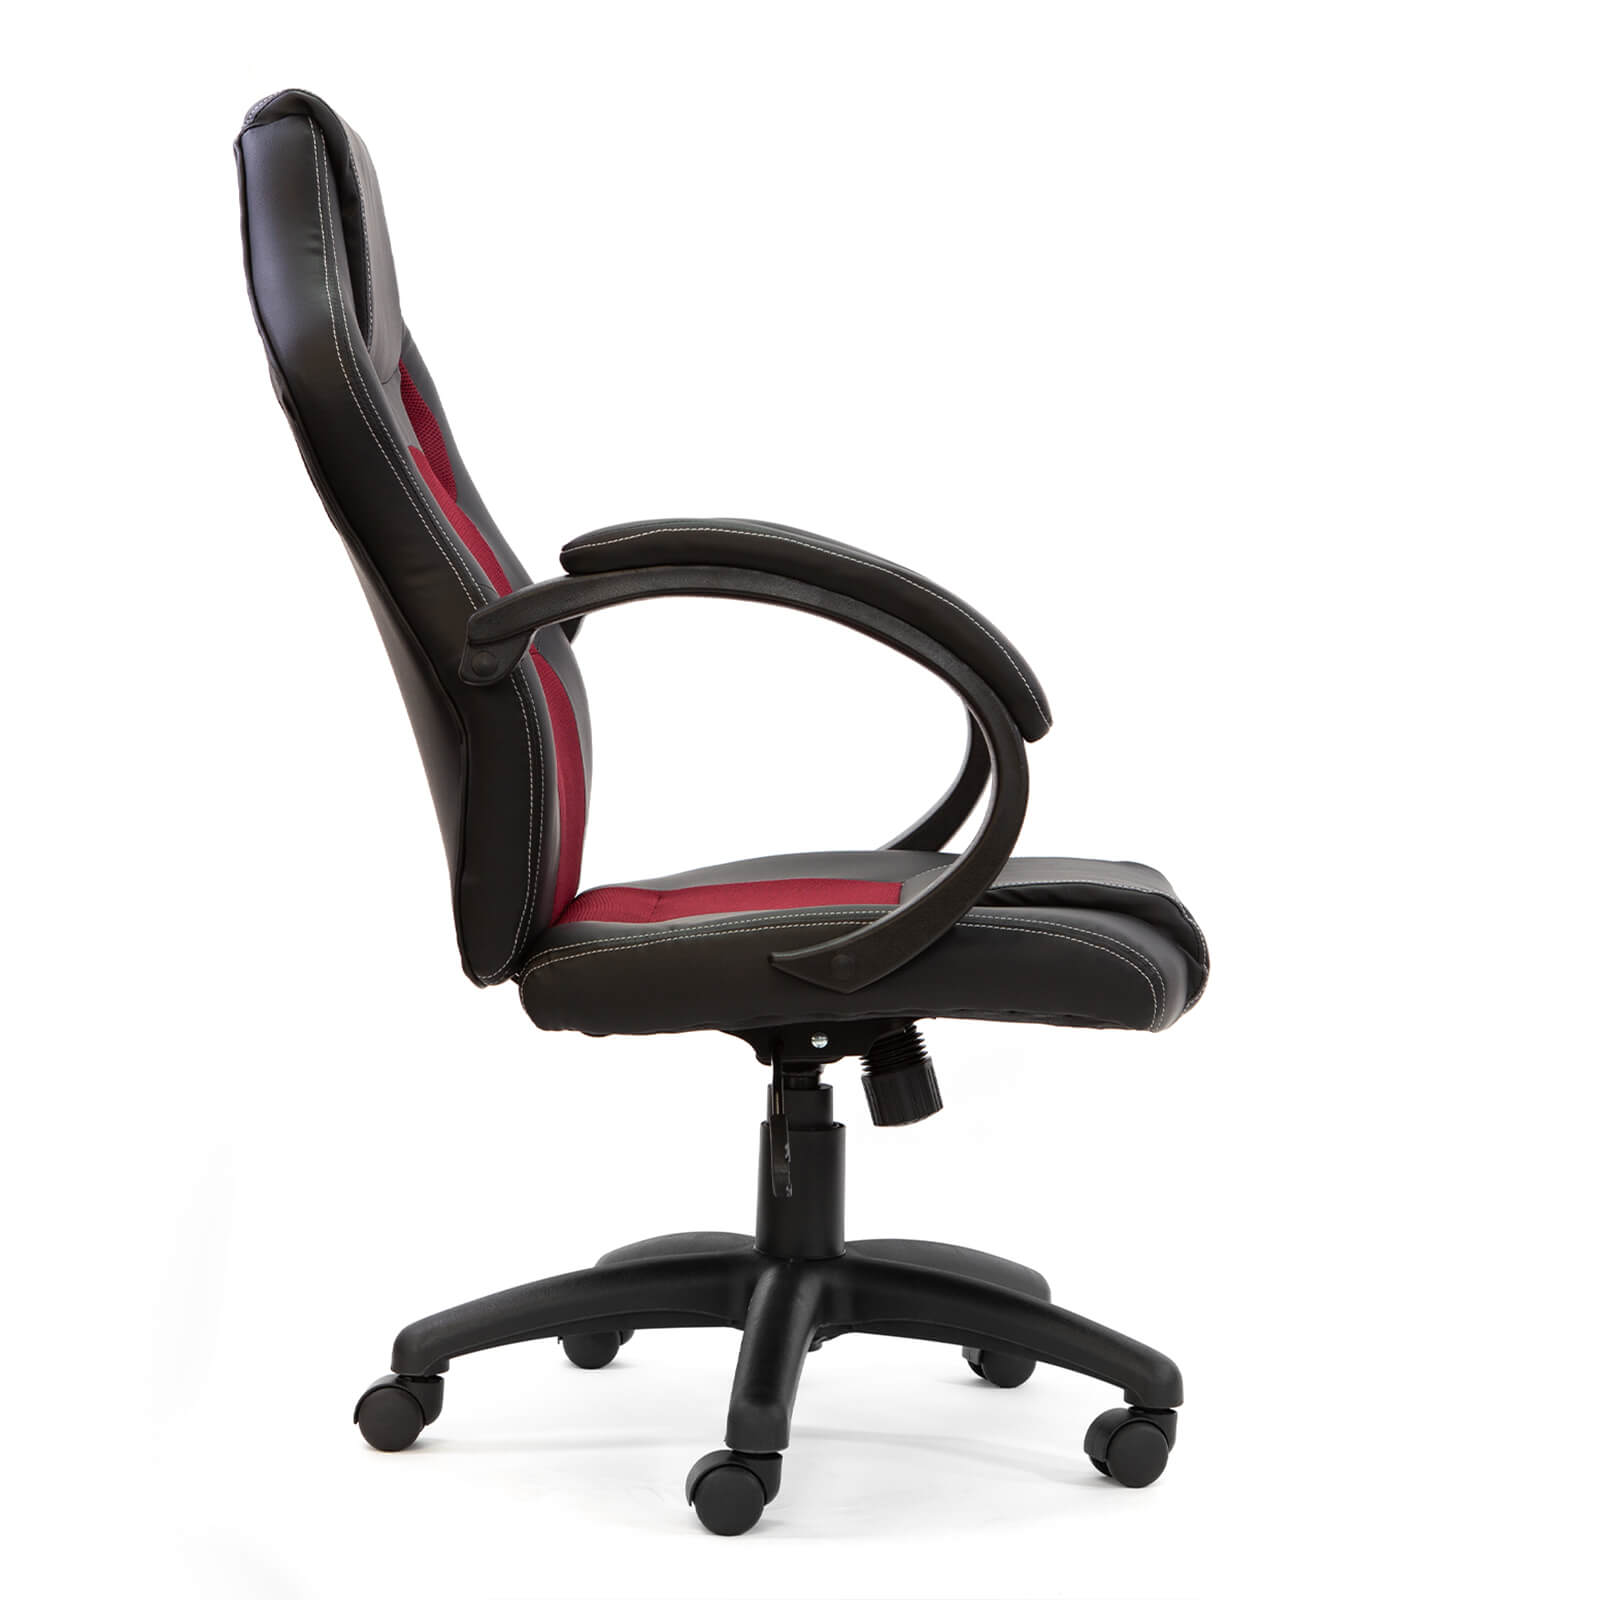 Buy Milano Adjustable Ergonomic Executive Racing Chair Red Black Online Australia at BargainTown